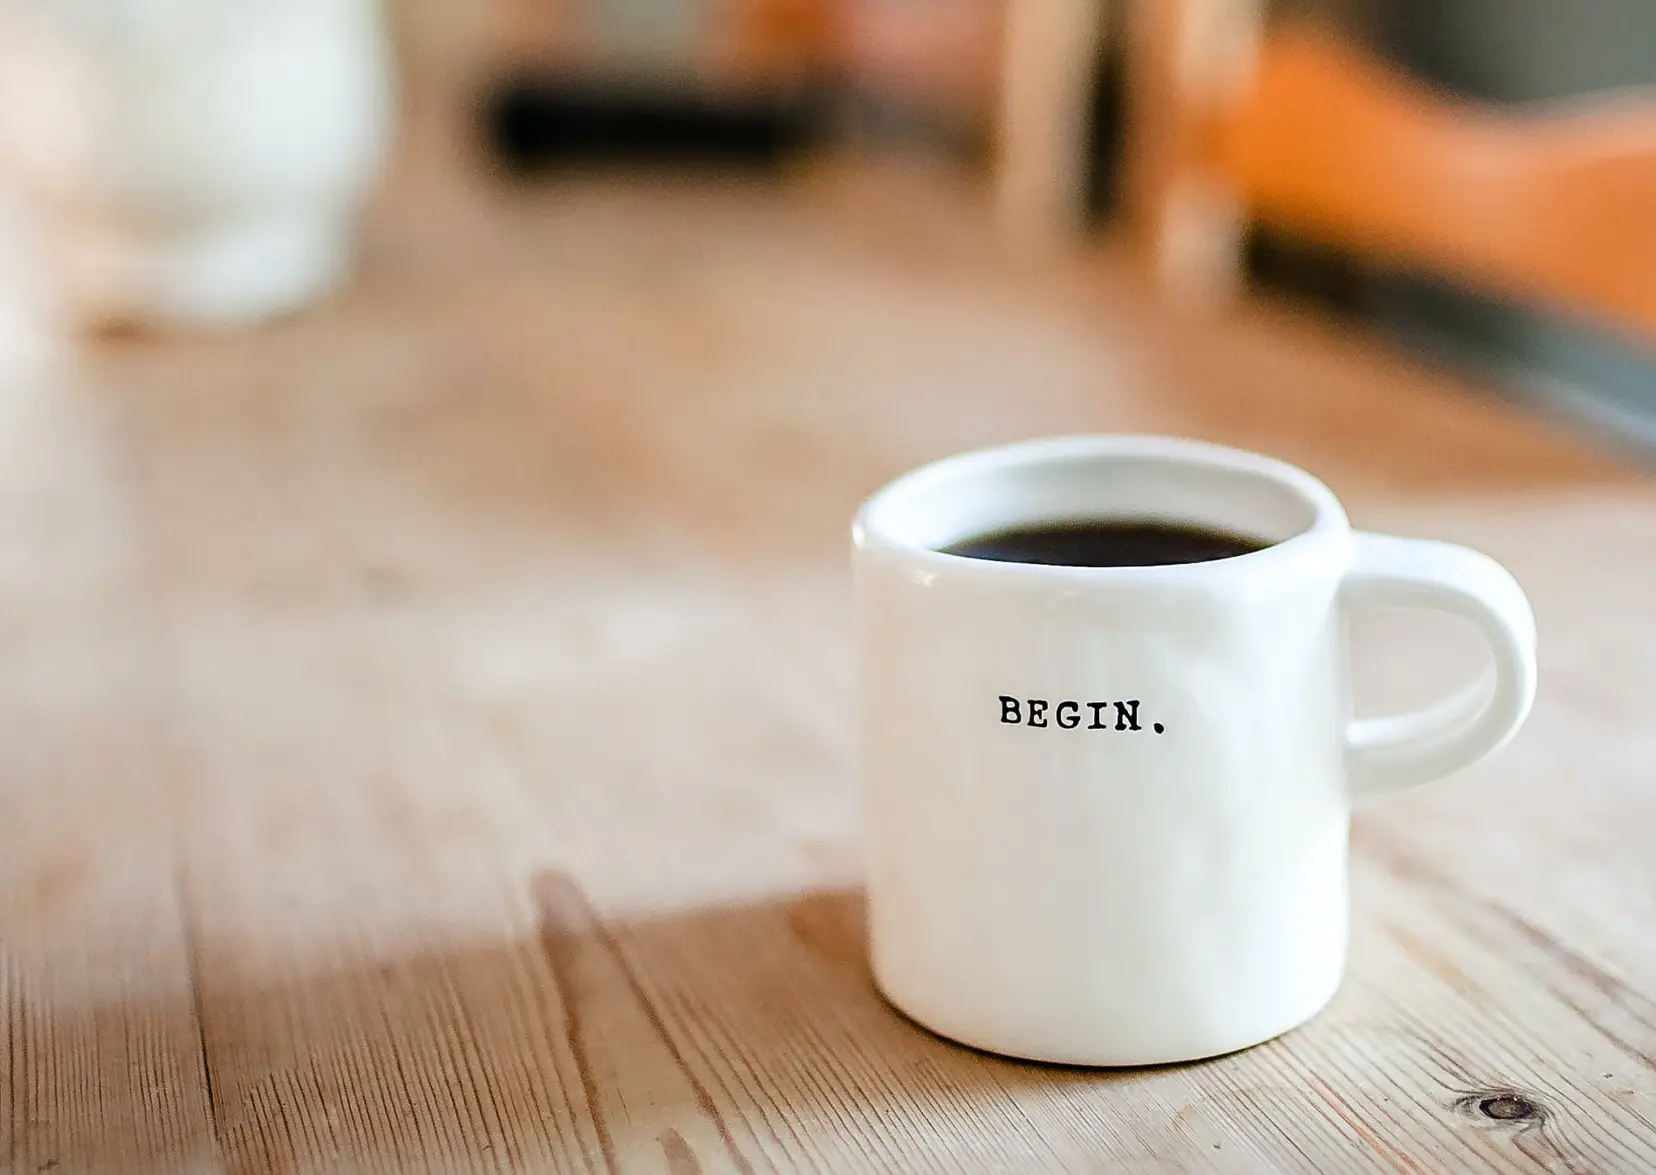 Coffee mug on a wooden table